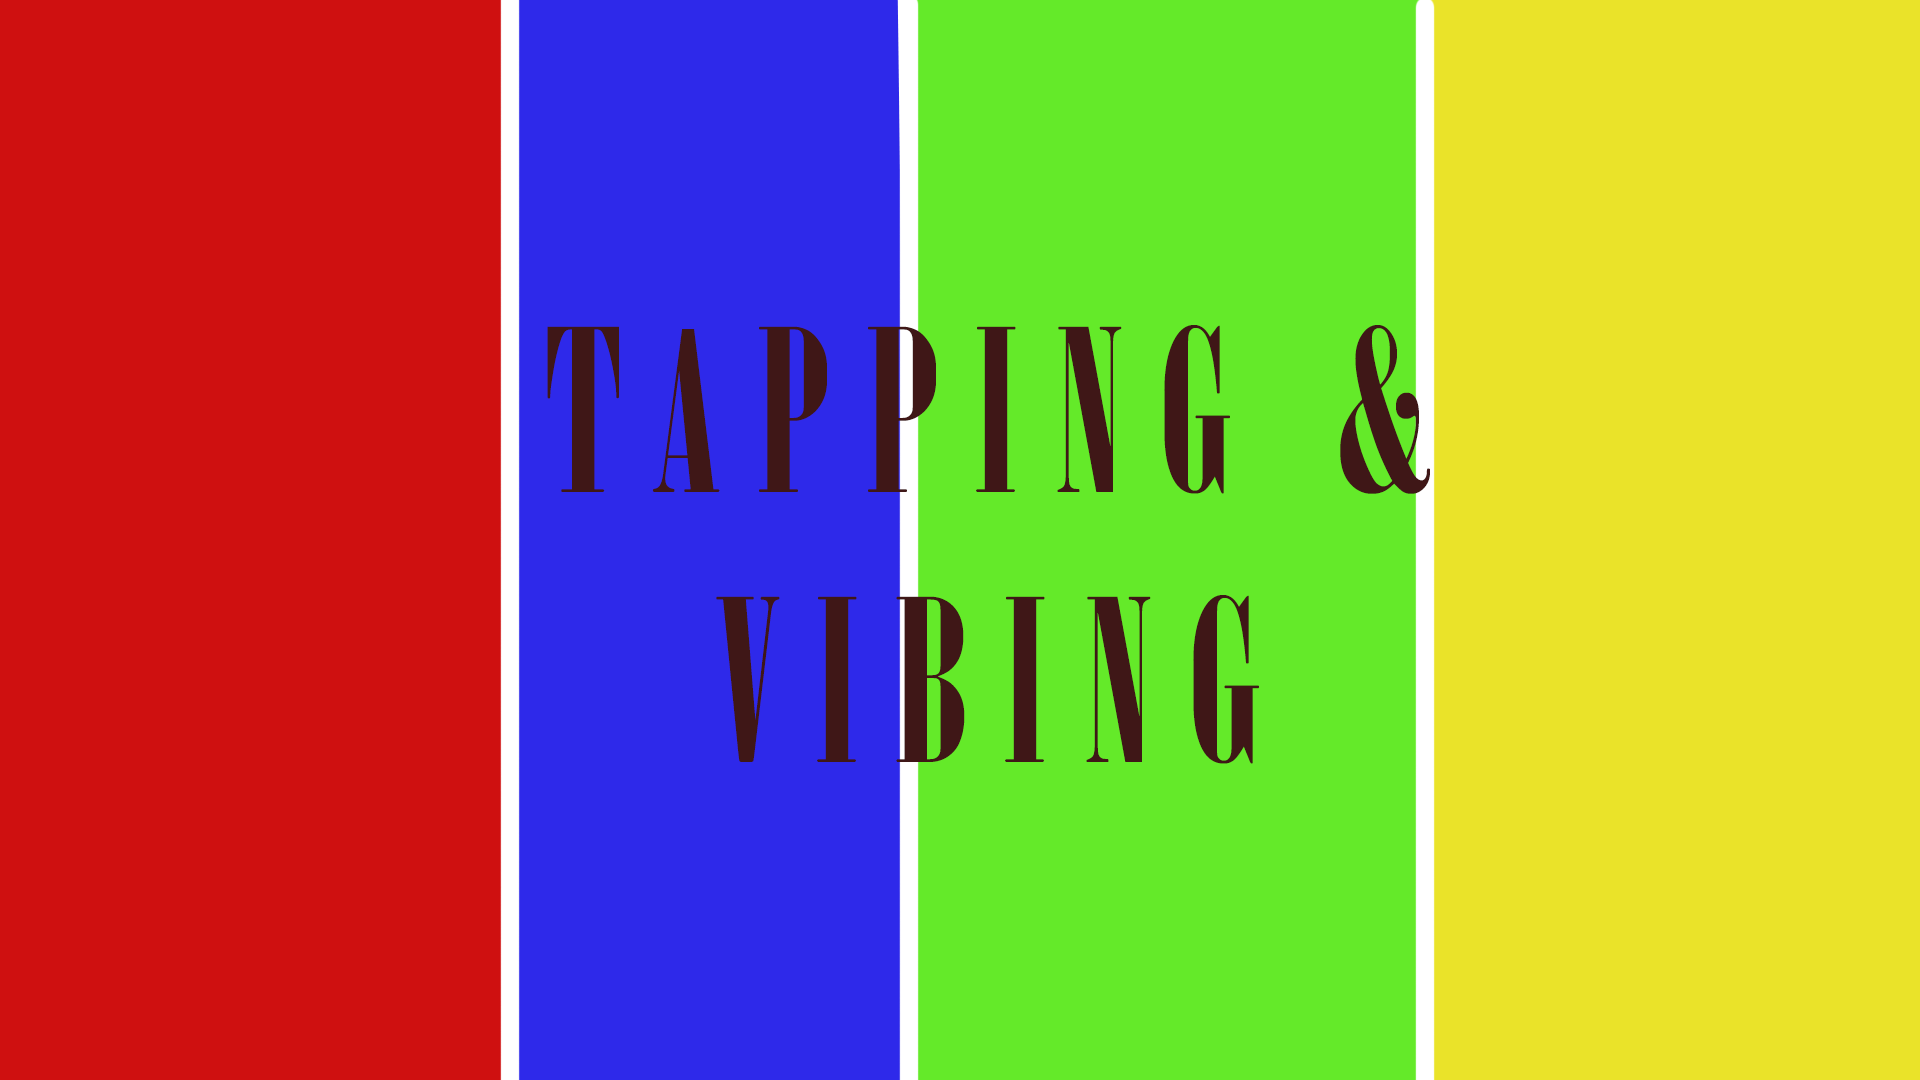 Tapping & Vibing